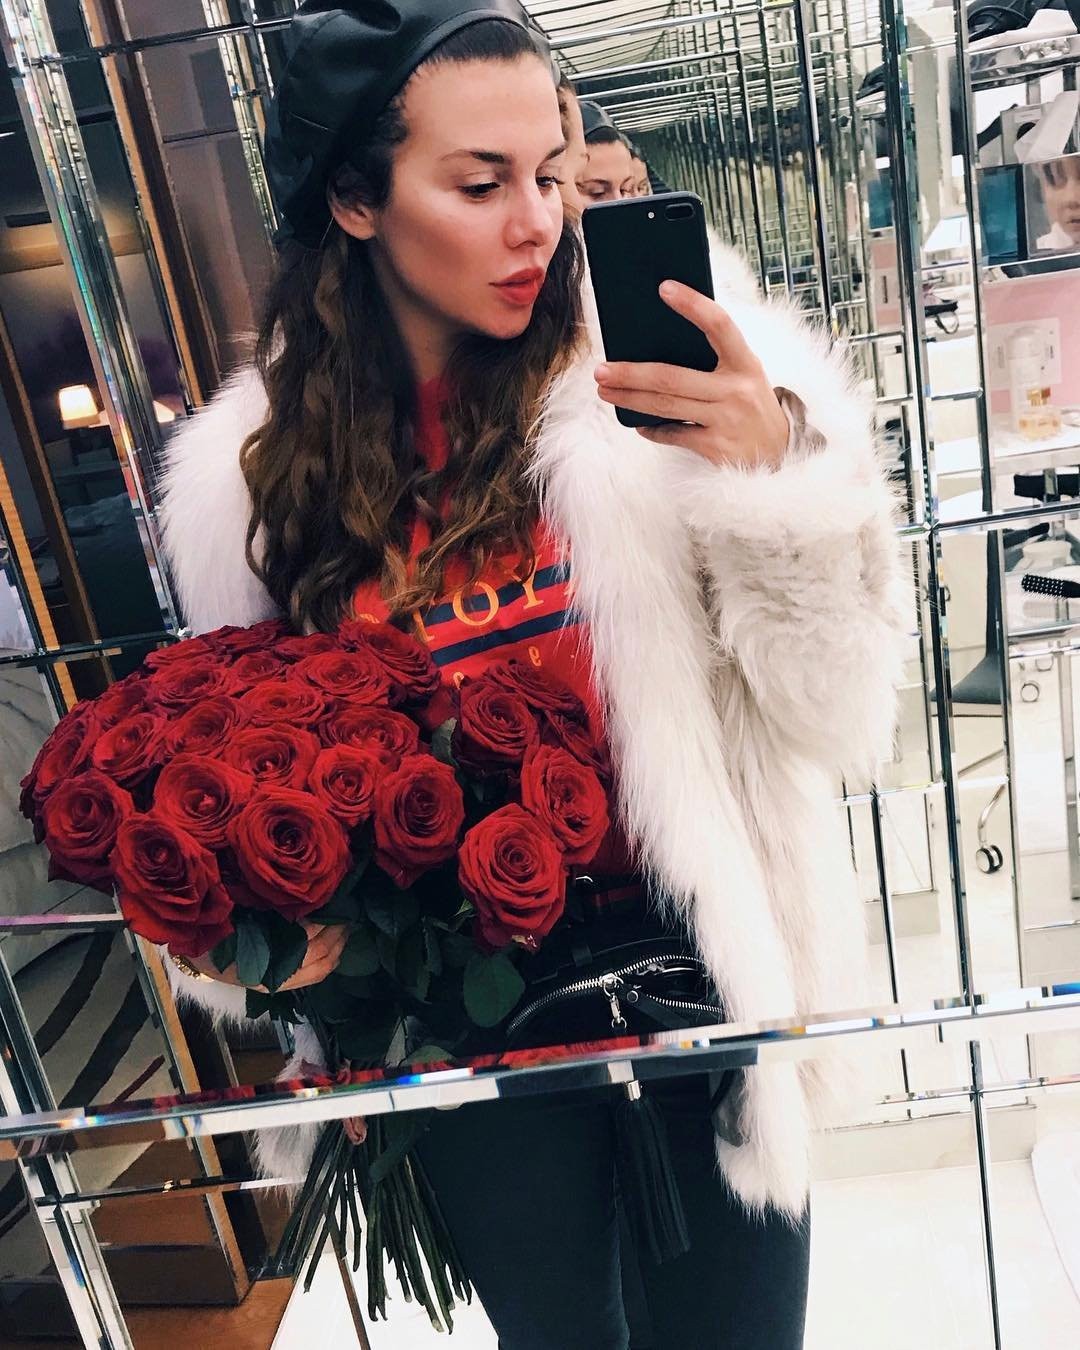 Анна Седокова восхитила снимком без макияжа в Instagram (ФОТО)